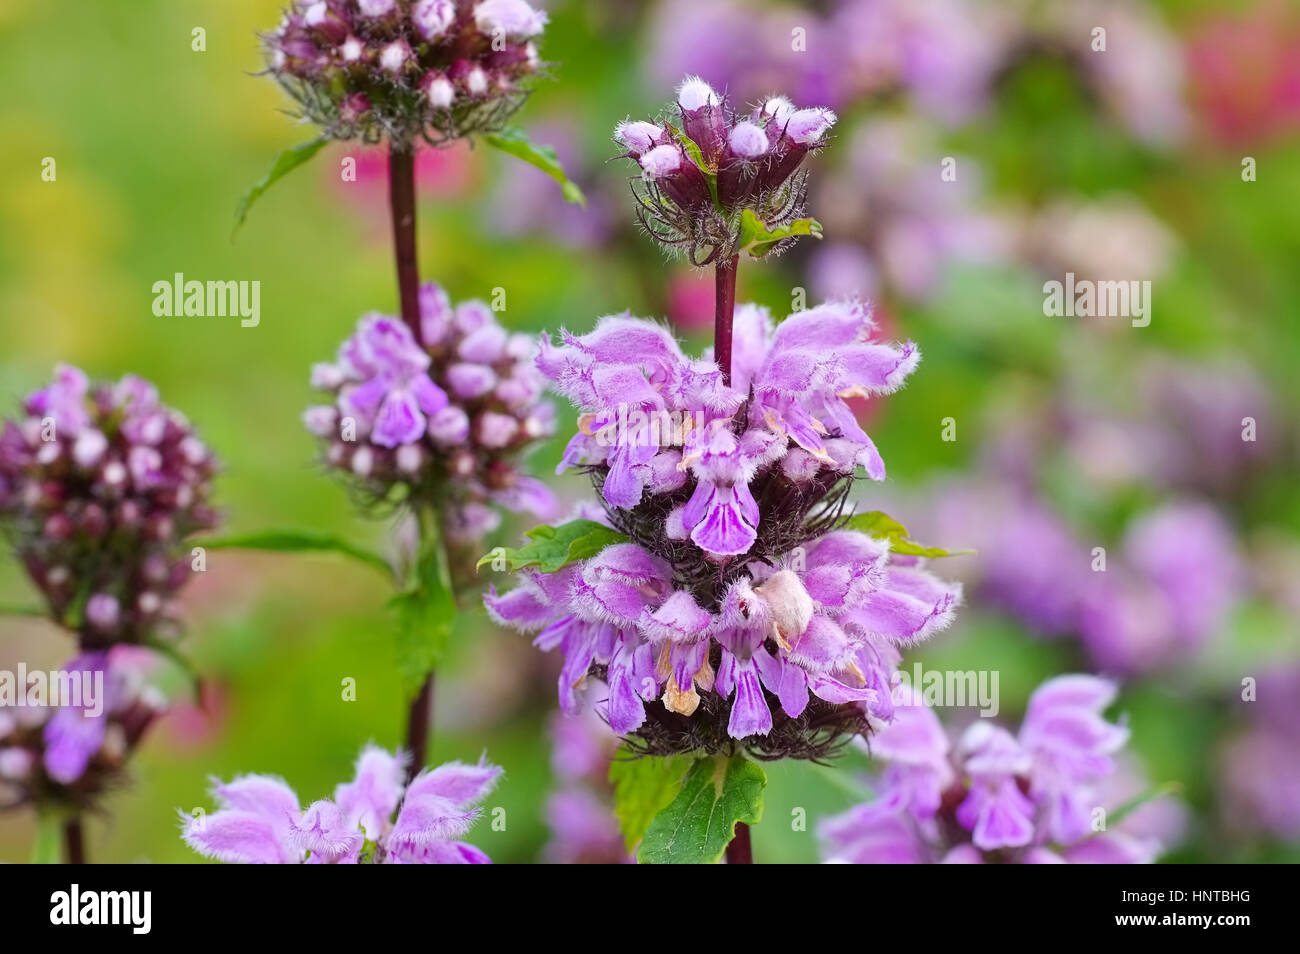 Brandkraut, Phlomis maximowiczii - Phlomis maximowiczii a purple wildflower Stock Photo